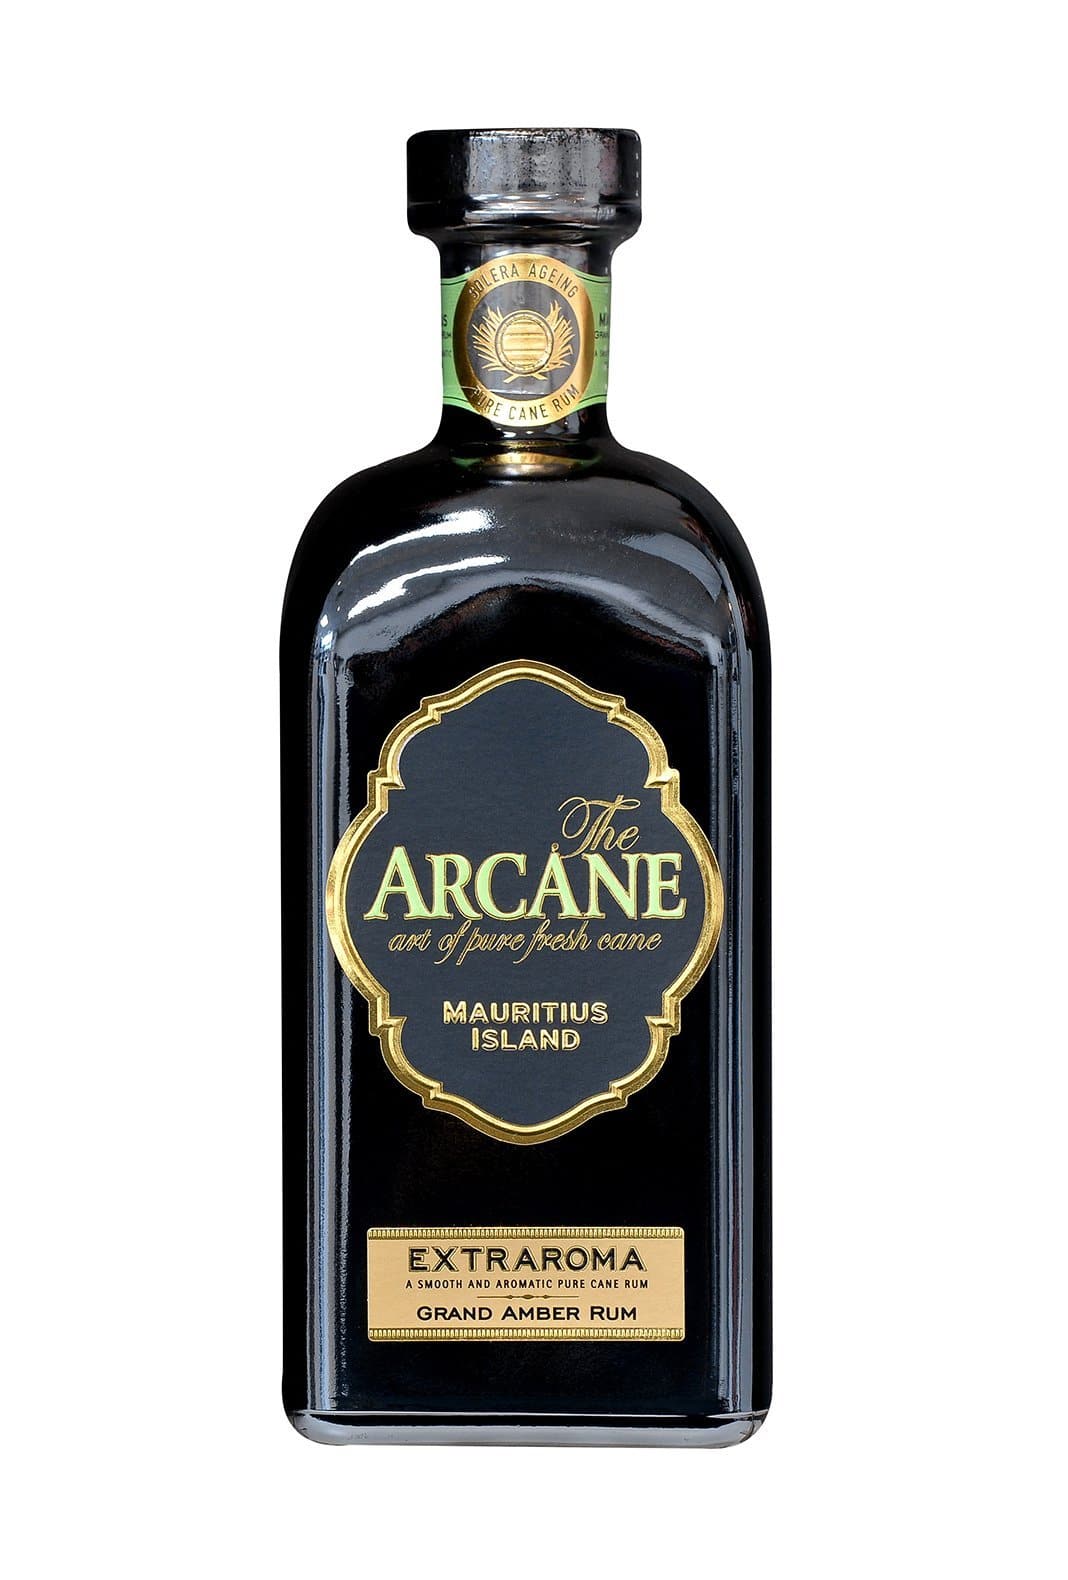 Arcane Amber Rum 'Extraroma' Solera 40% 700ml | Rum | Shop online at Spirits of France